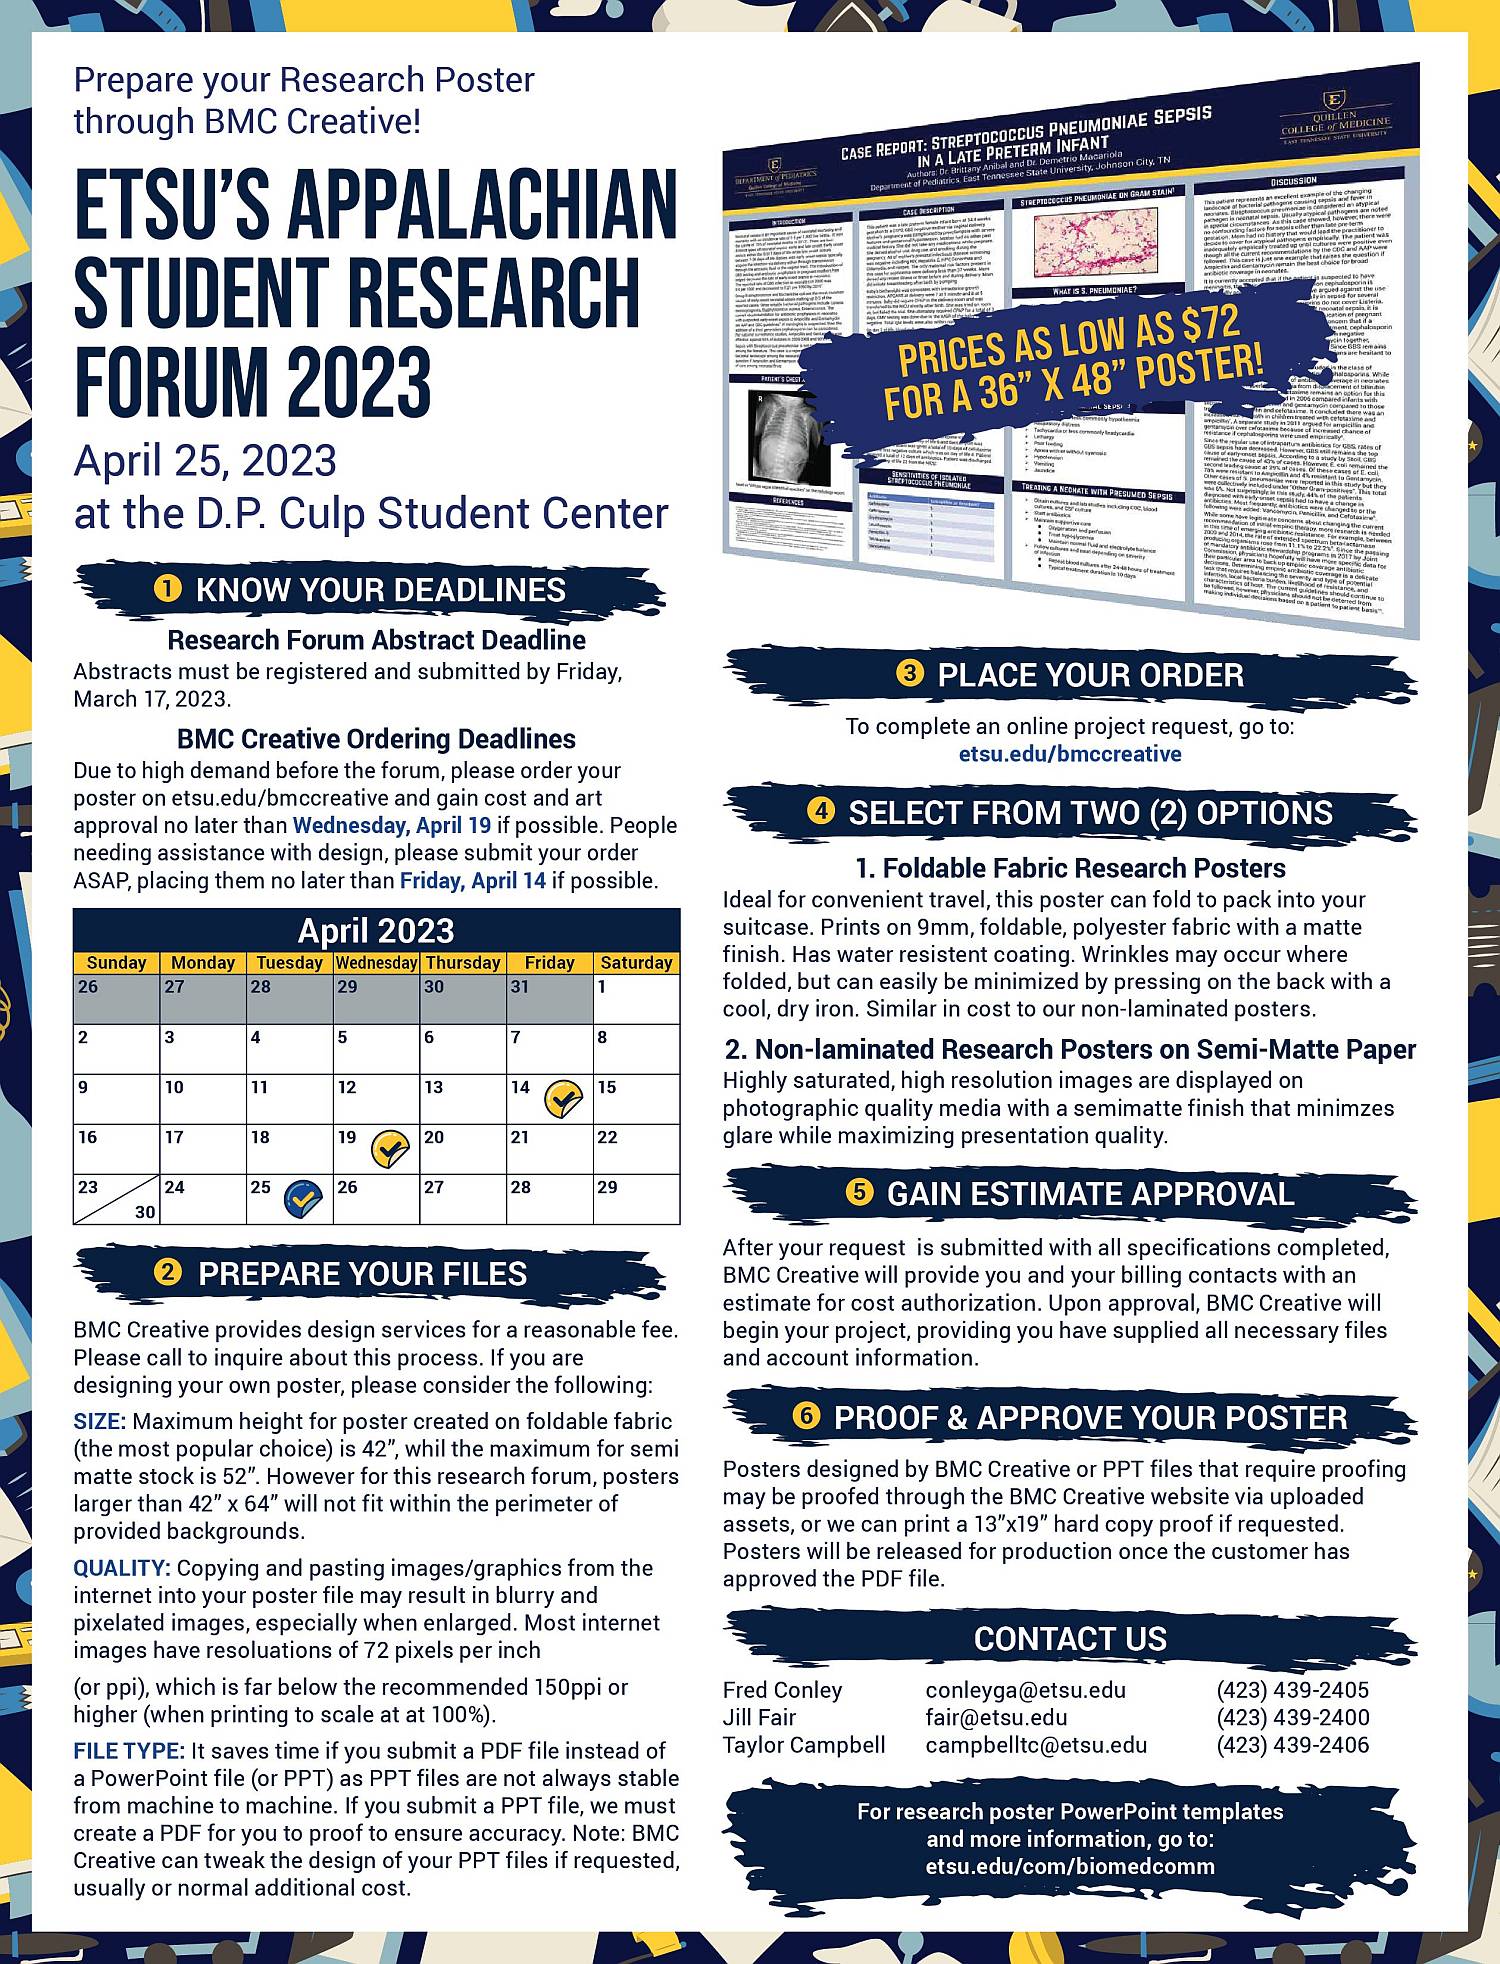 ETSU Appalachian Student Research Forum/Boland Symposium Information